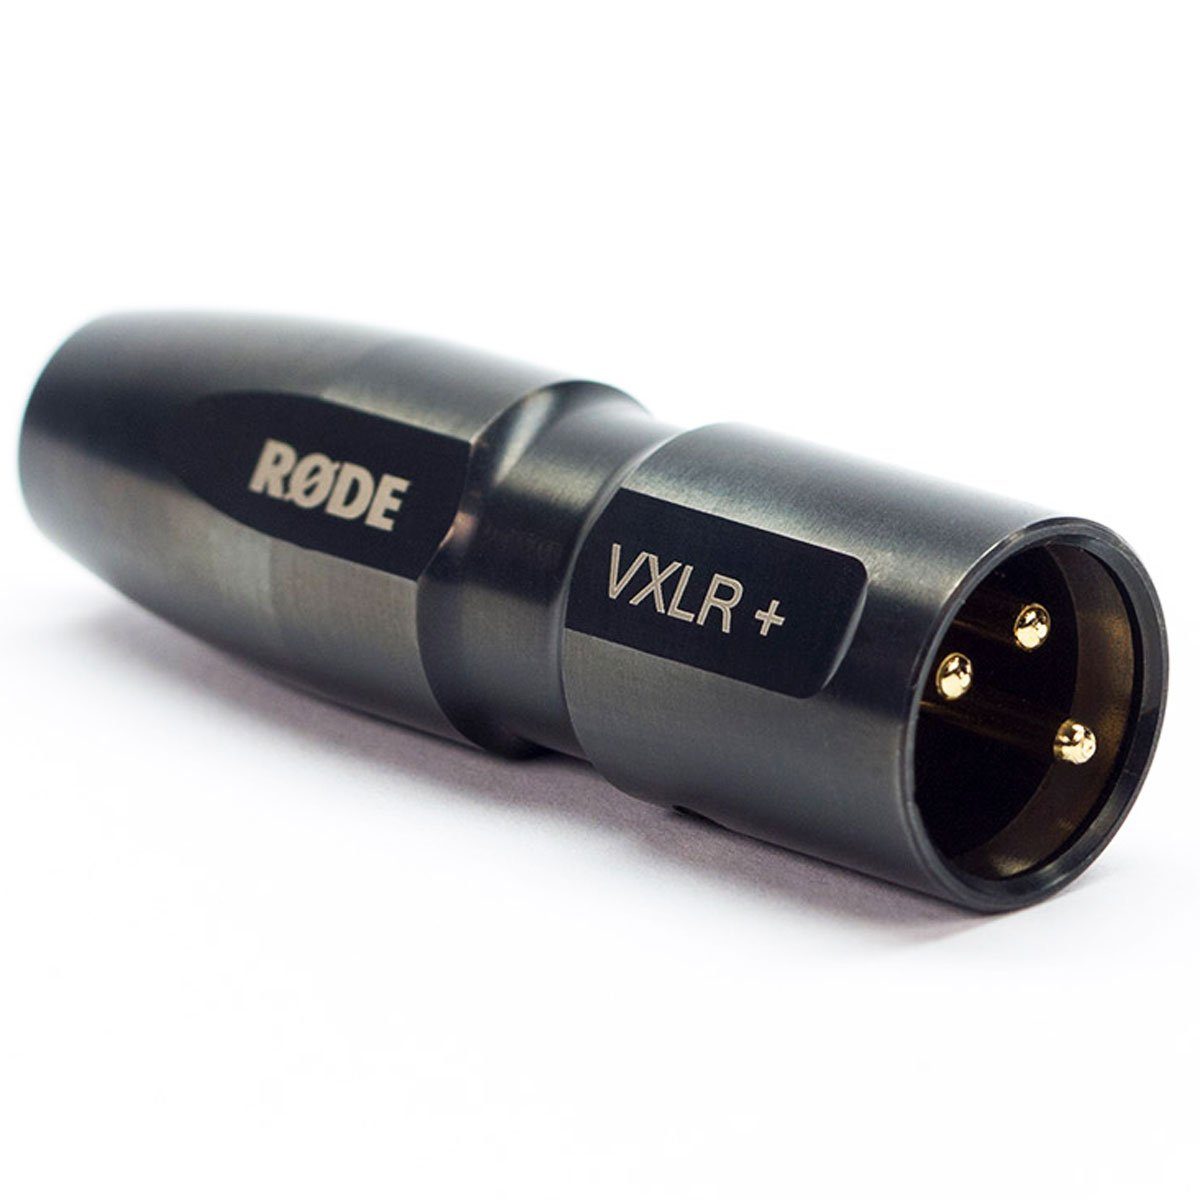 RØDE VXLR+ XLR TRS-Miniklinke Adapter Audio-Adapter xlr zu 3,5-mm-Klinke